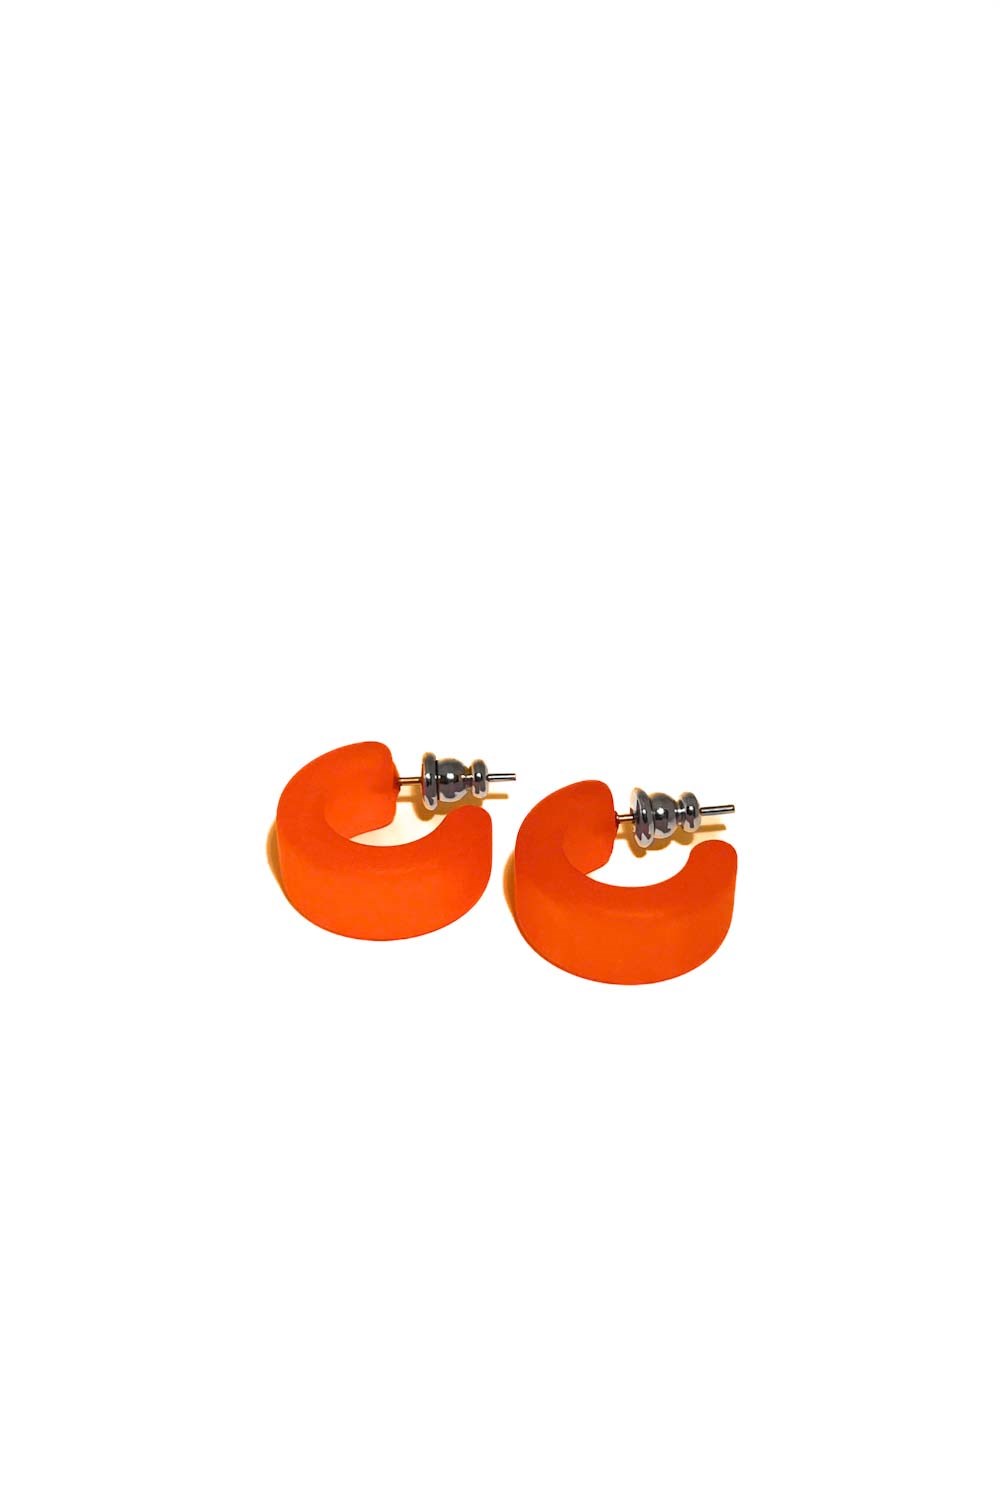 Earrings resin 60s style orange